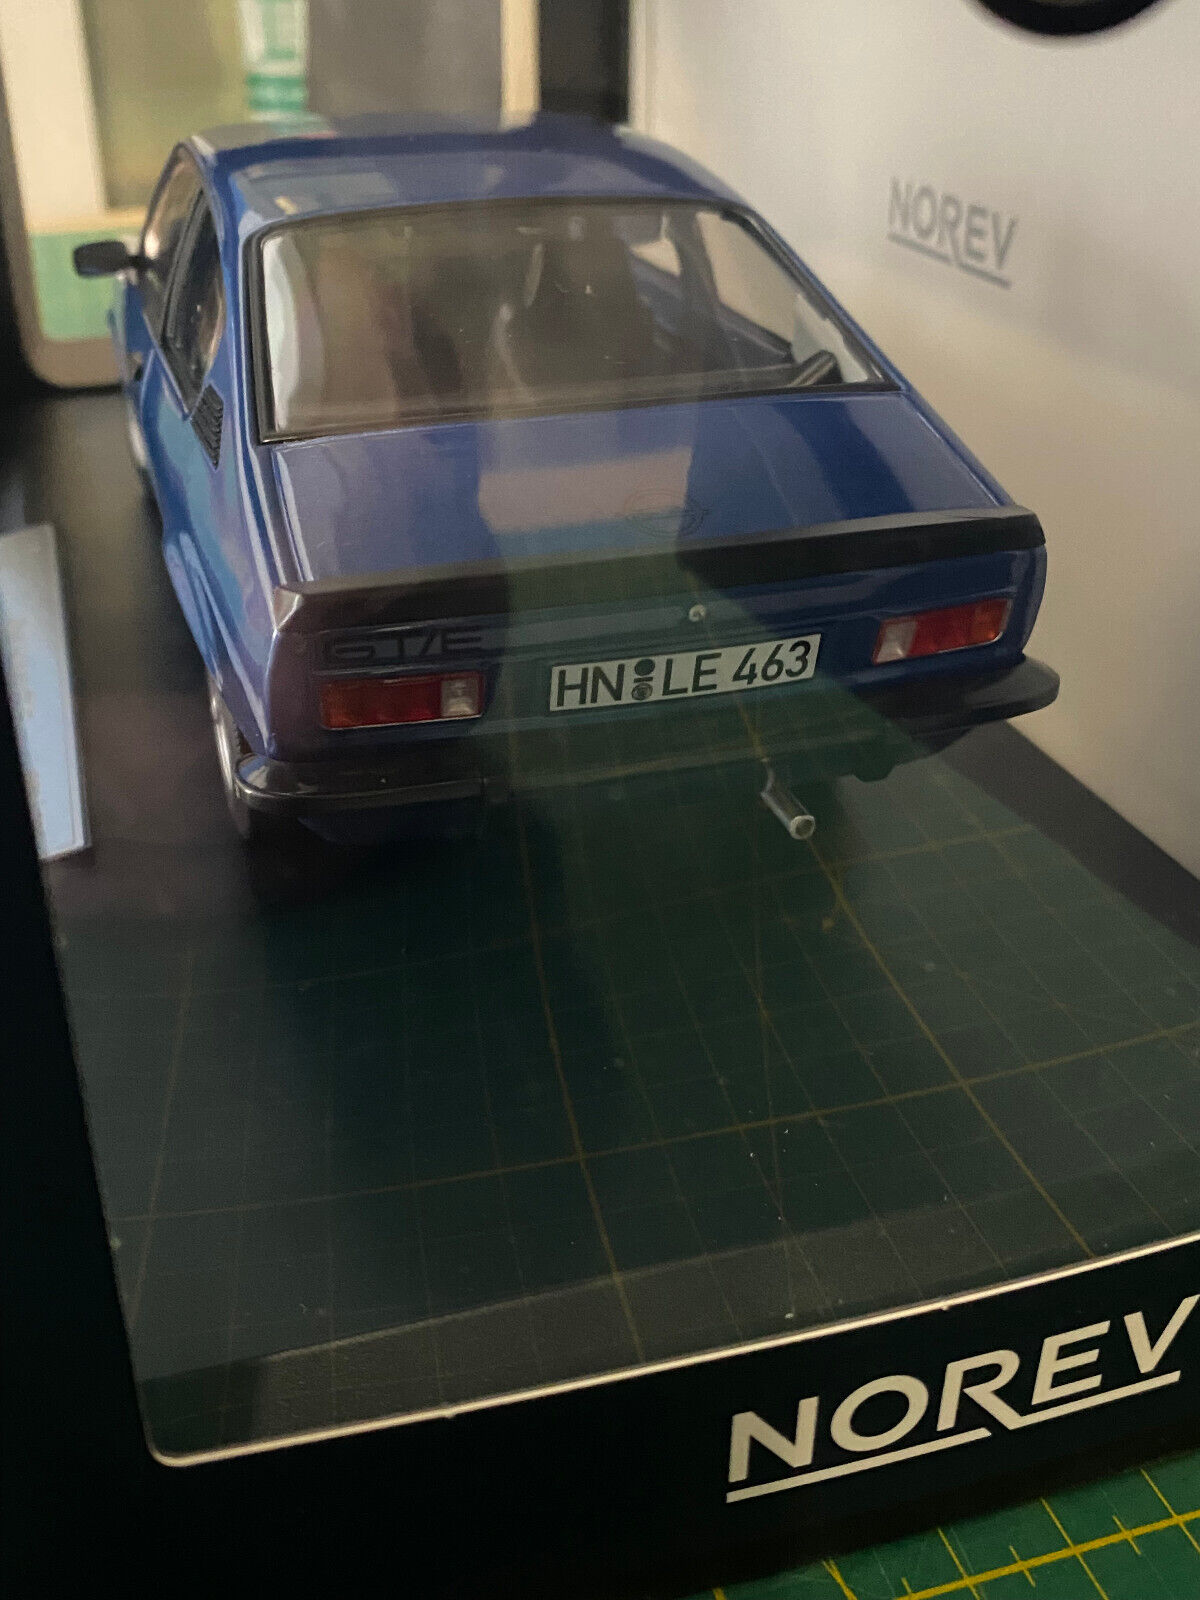 Opel Kadett C GT/E 1977 Blau Metallic ExluWeb #008 von 200 Norev 183652 1:18